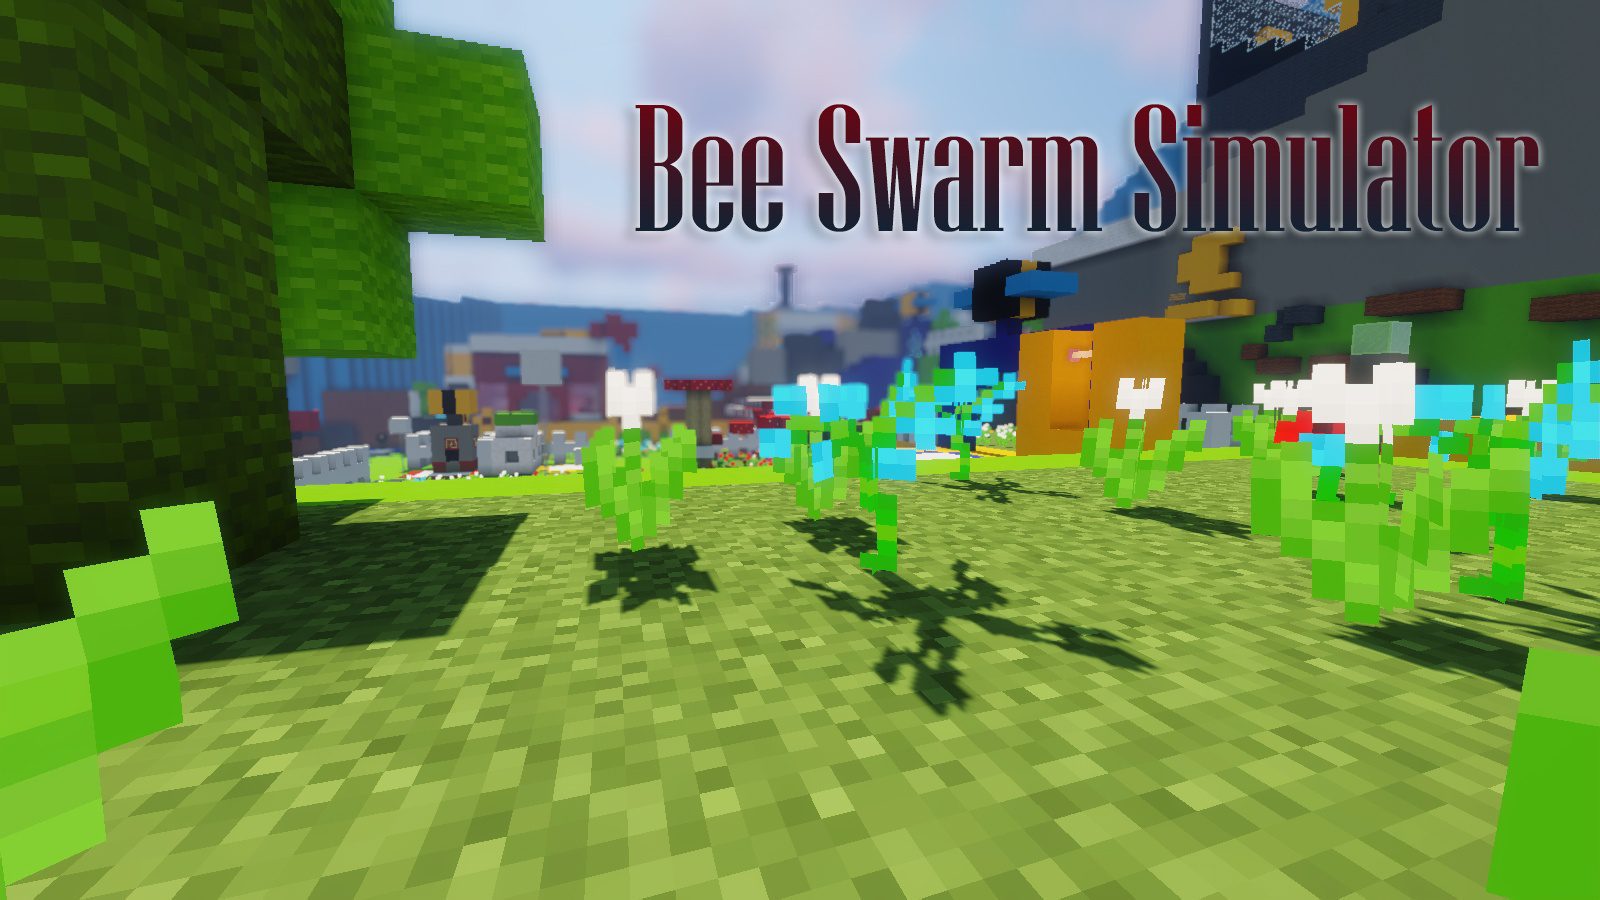 Bee Swarm Simulator Map 2020